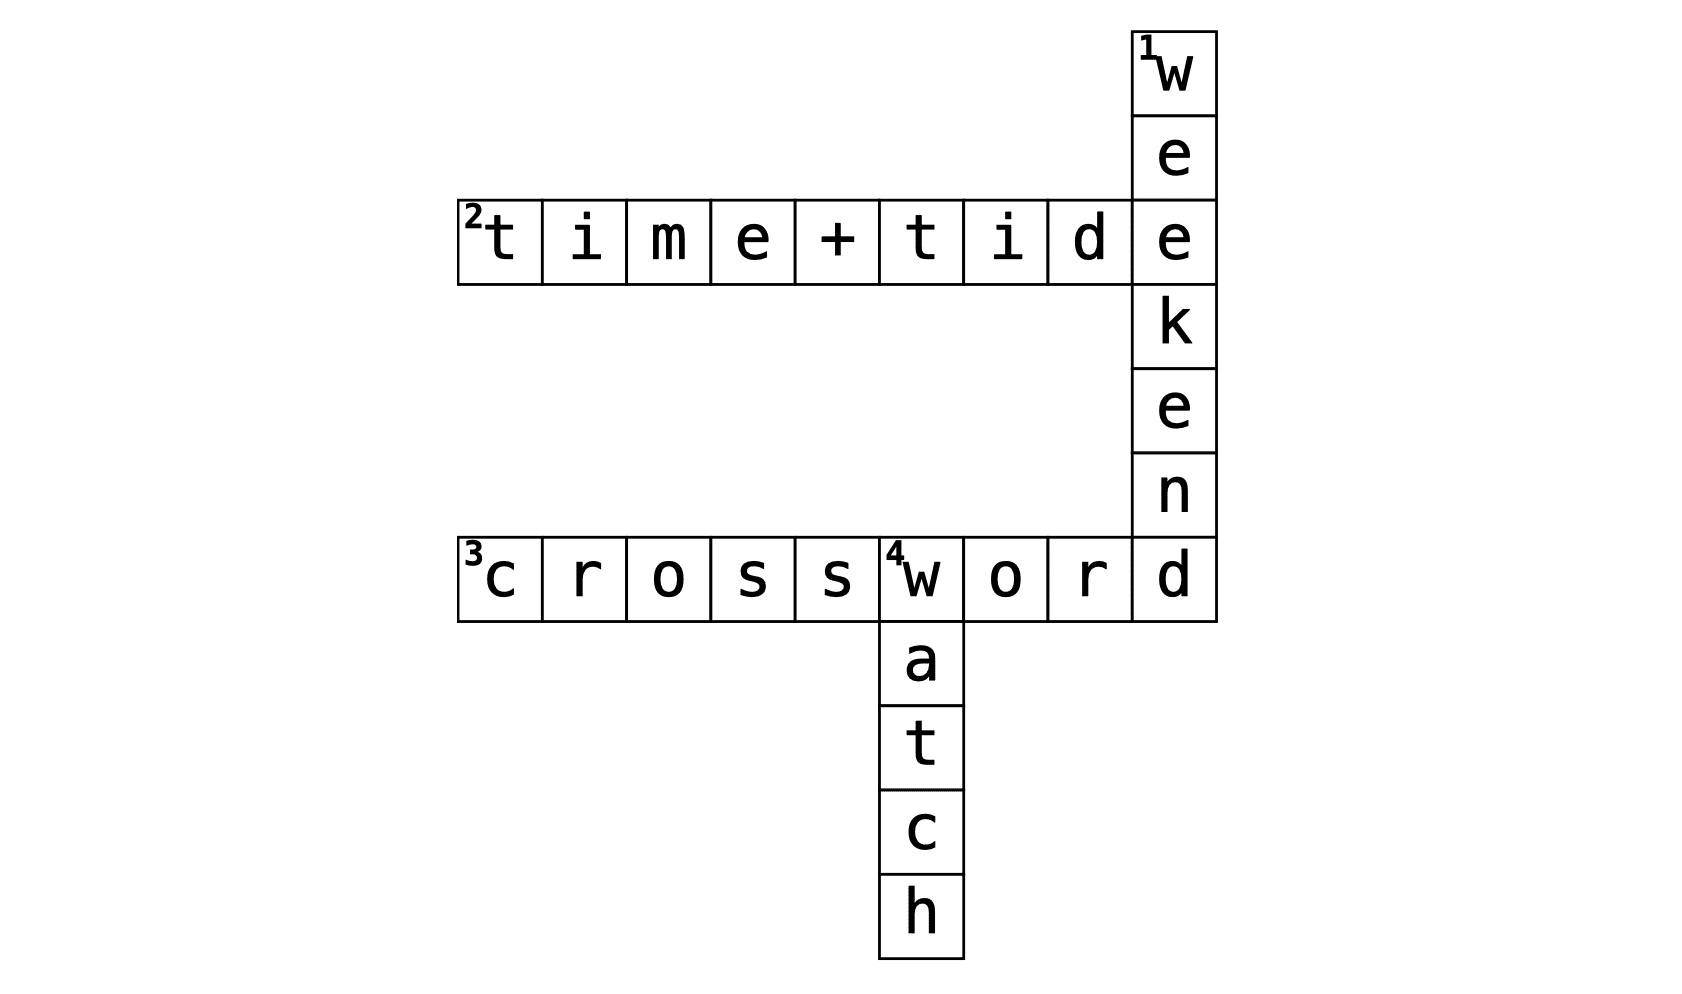 Time+Tide Weekend Watch Crossword: #26 “Hamilton Watches in Film”